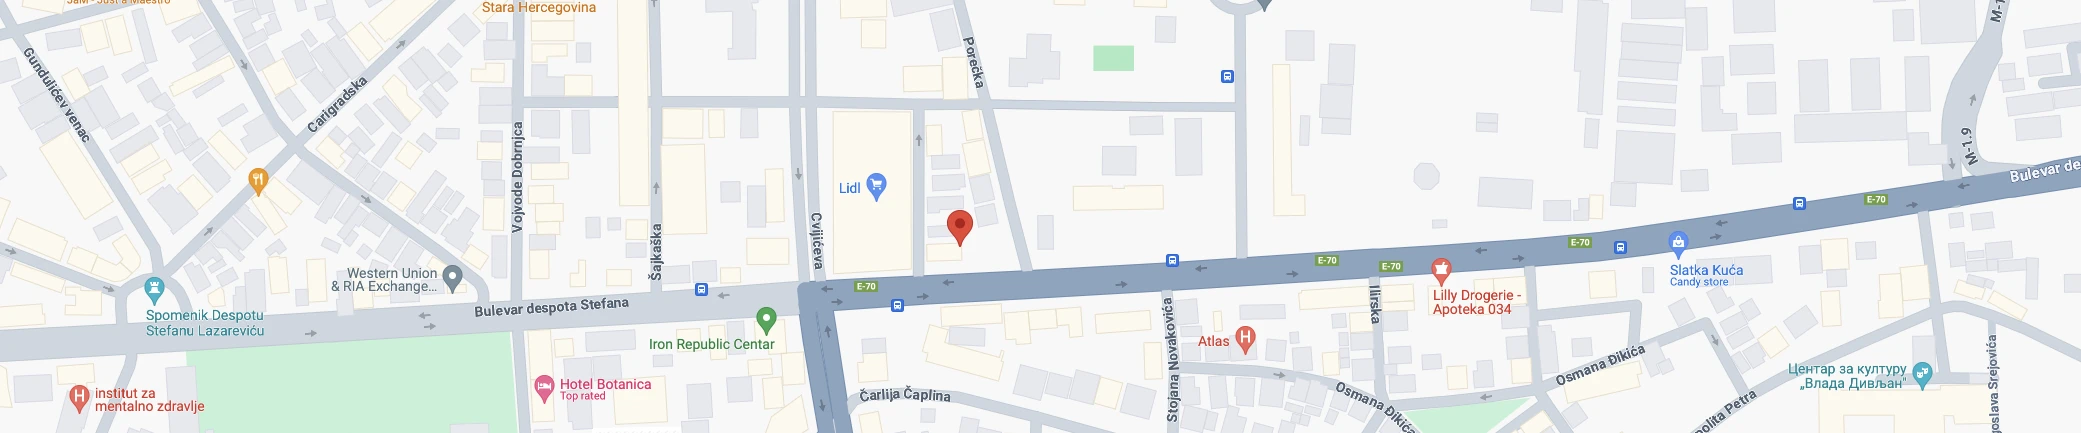 Google location map